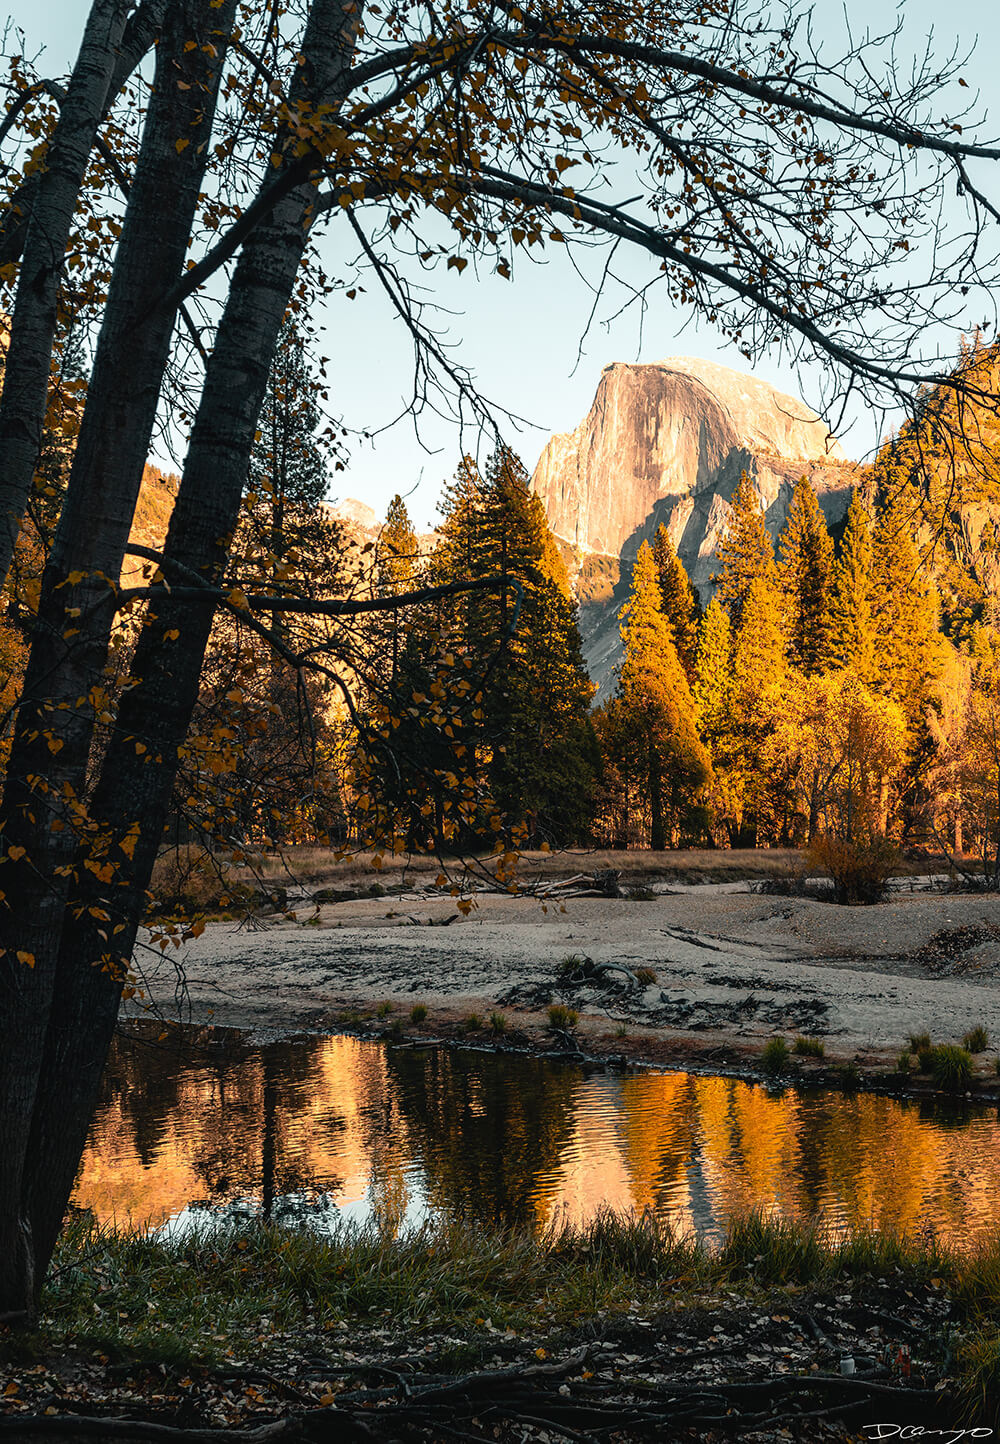 Photos from the Yosemite Valey in Yosemite National Park, California.